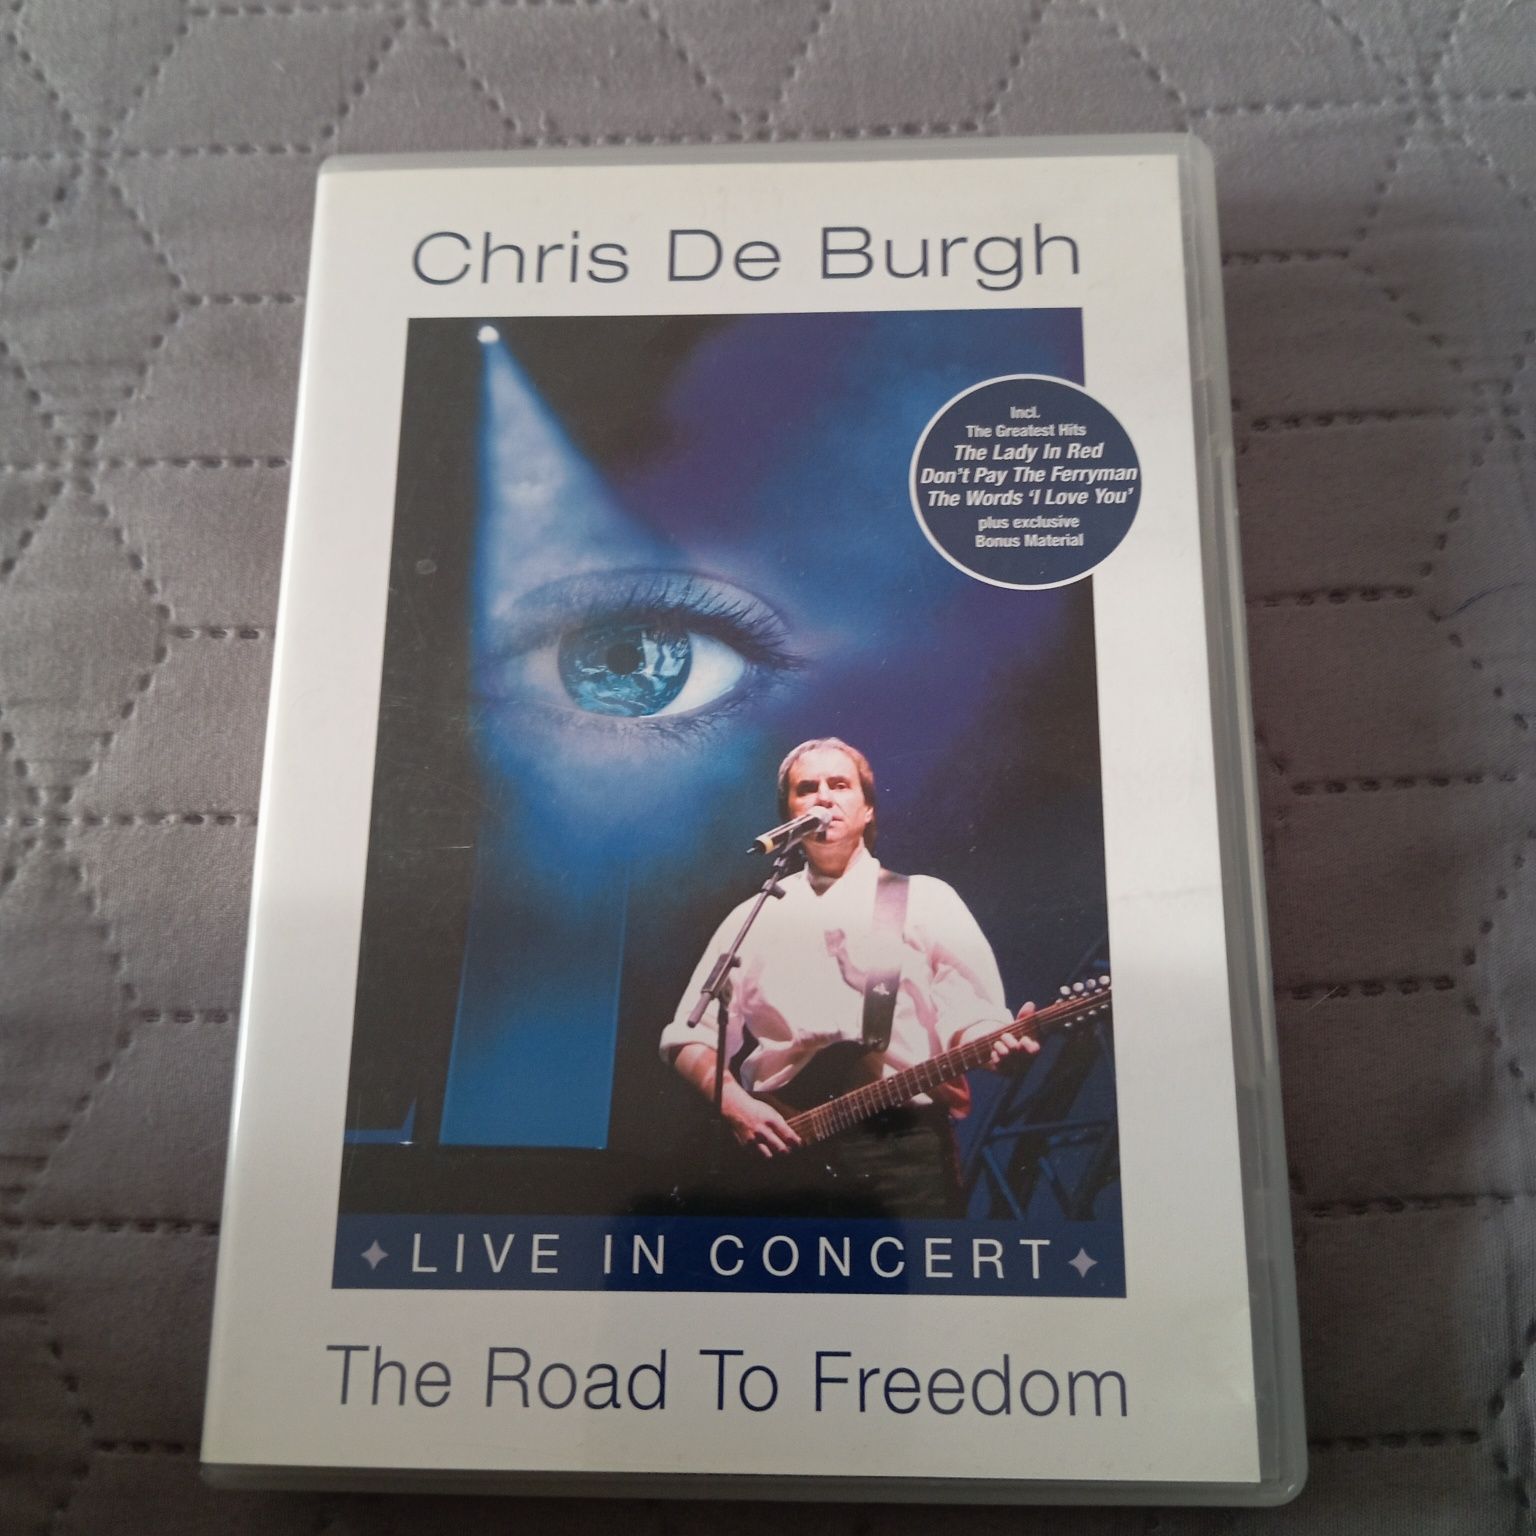 Chris de Burgh "The road to freedom" live, DVD stan bdb